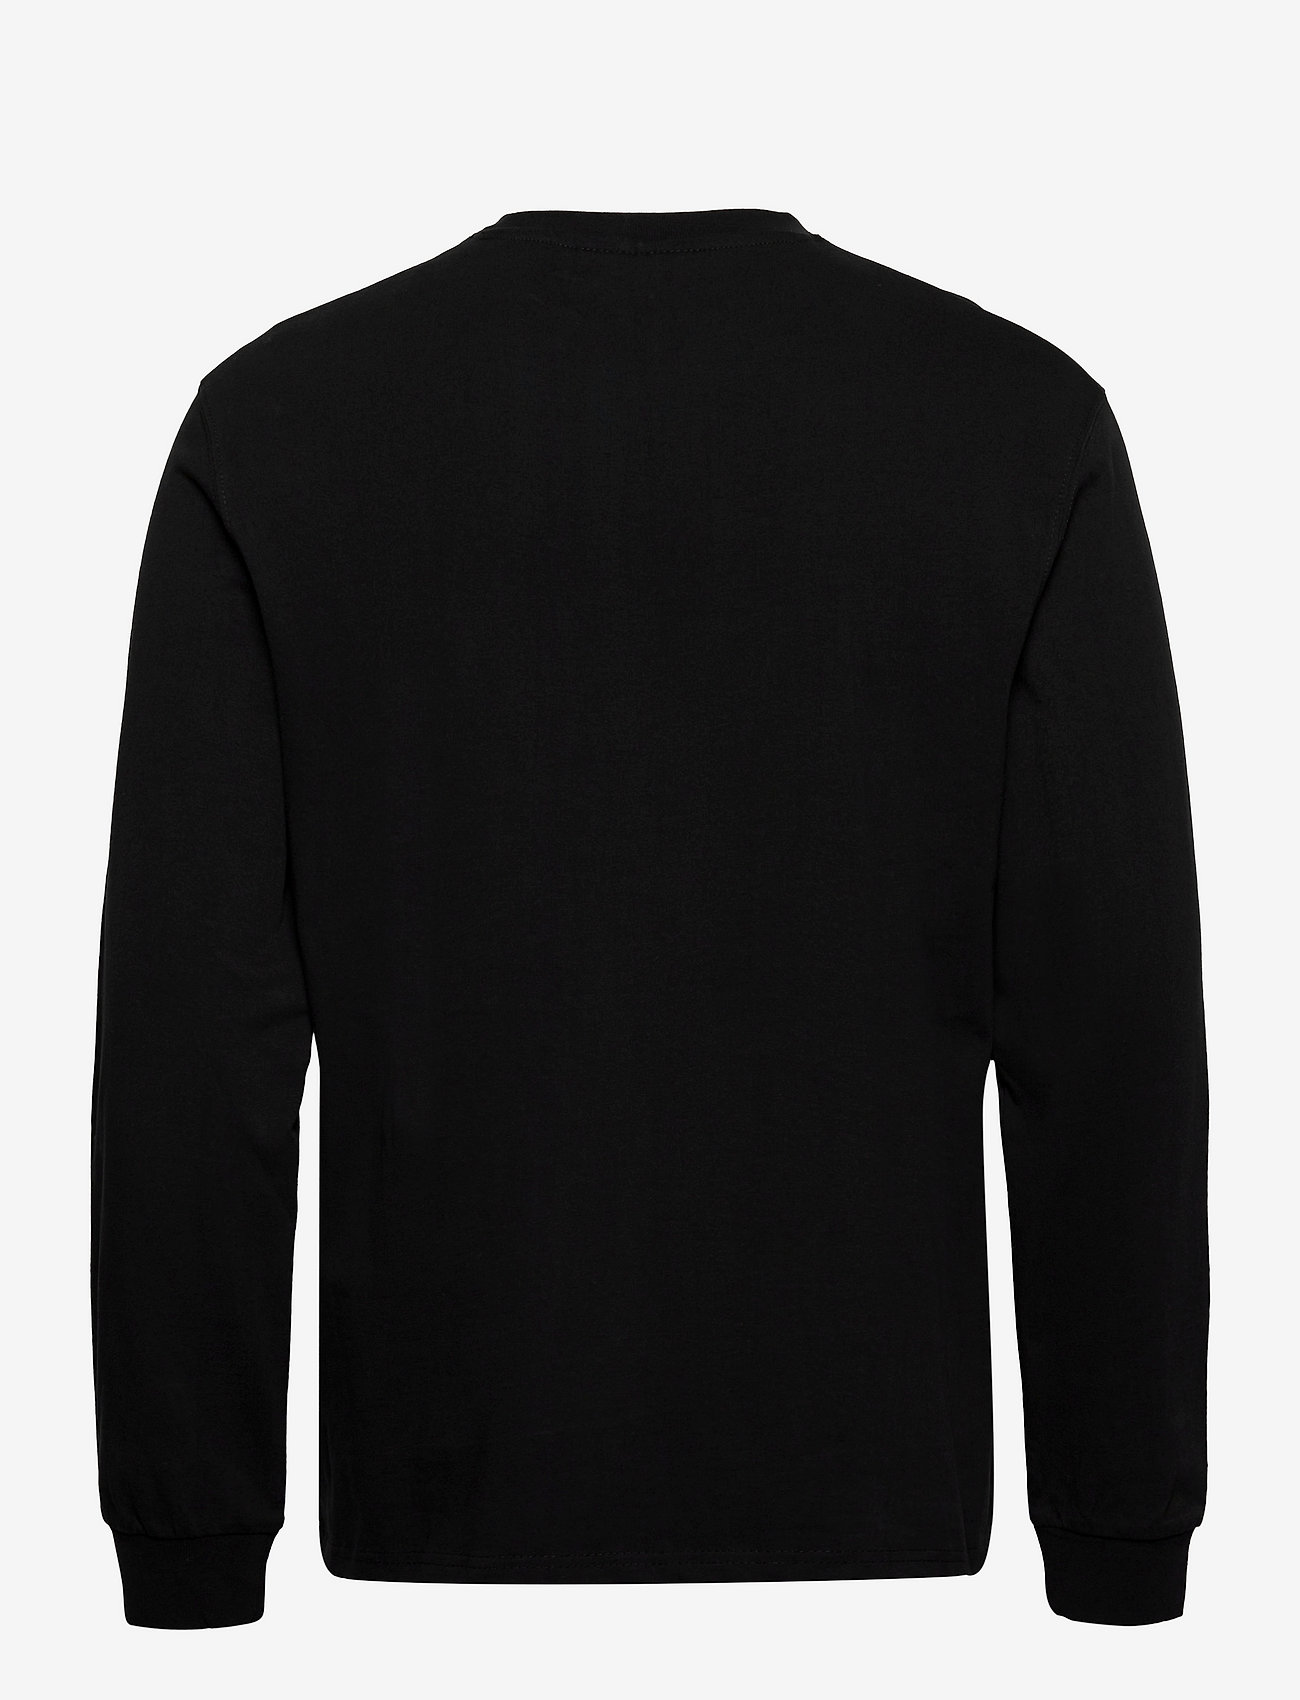 HAN Kjøbenhavn - Casual Tee Long Sleeve - t-shirts - black logo - 1